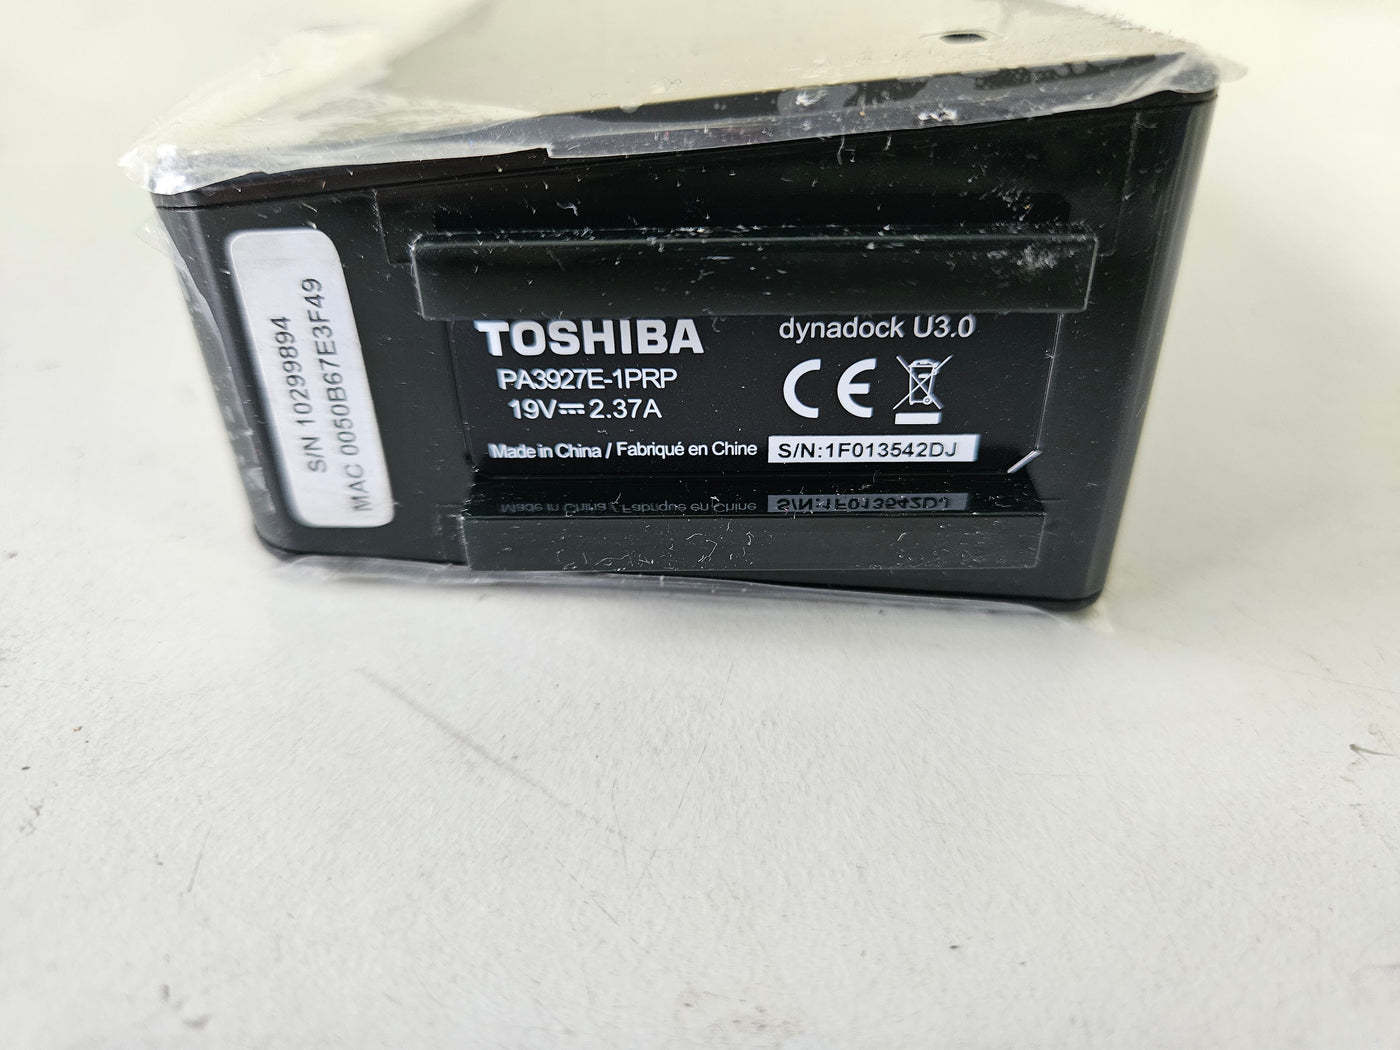 Toshiba Dynadock U3.0 19V 2.37A Docking Station W/PSU ( PA3927E-1PRP ) REF